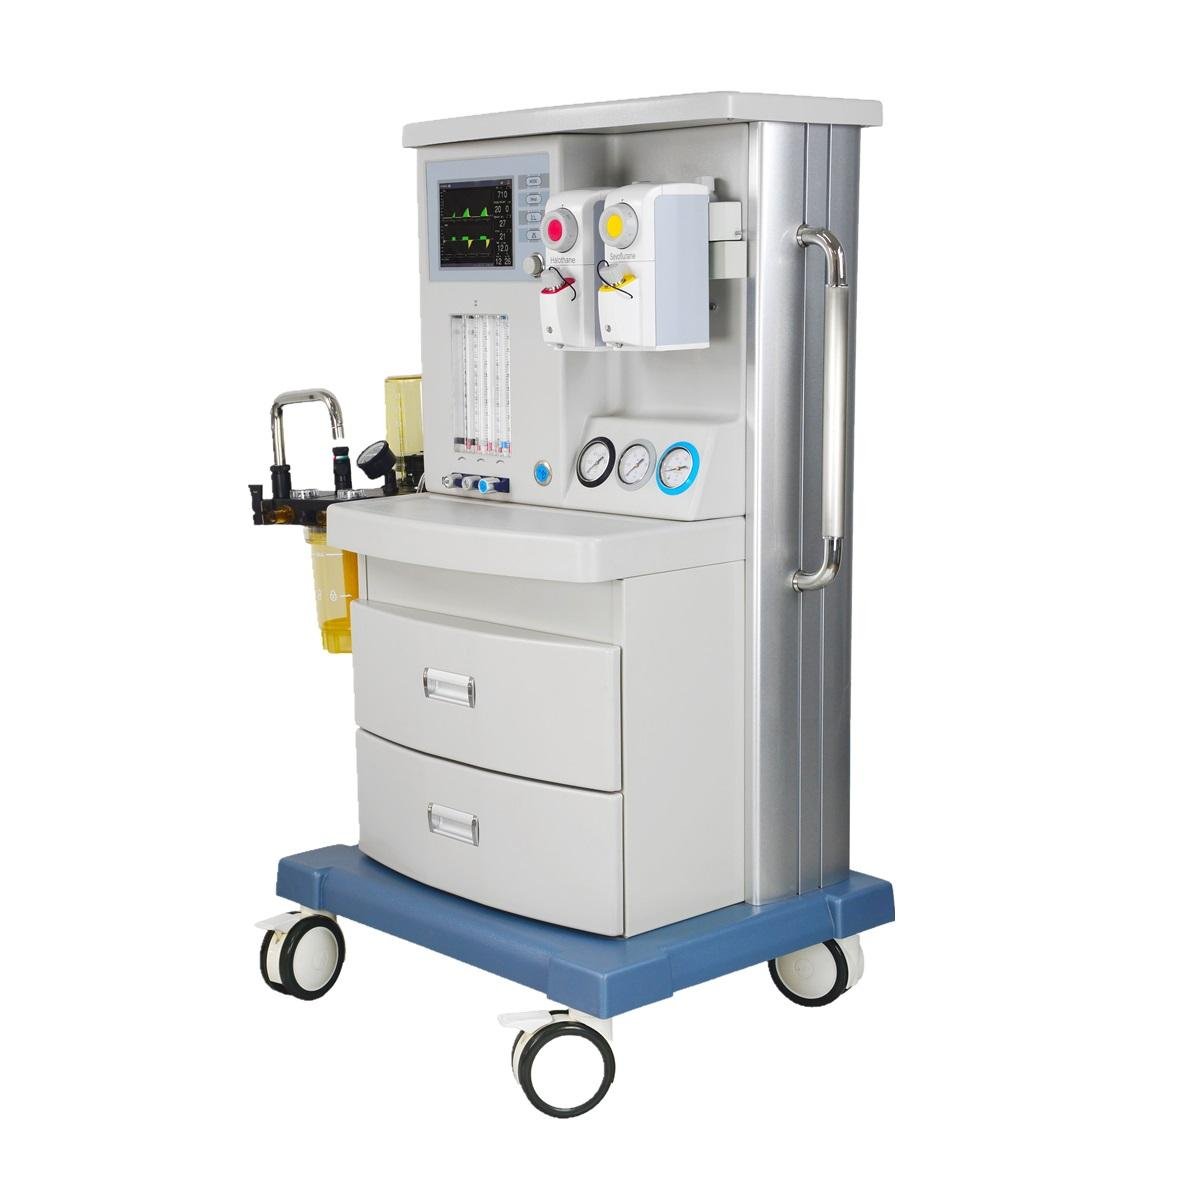 YJ-8502 Multifunctional Anesthesia Machine